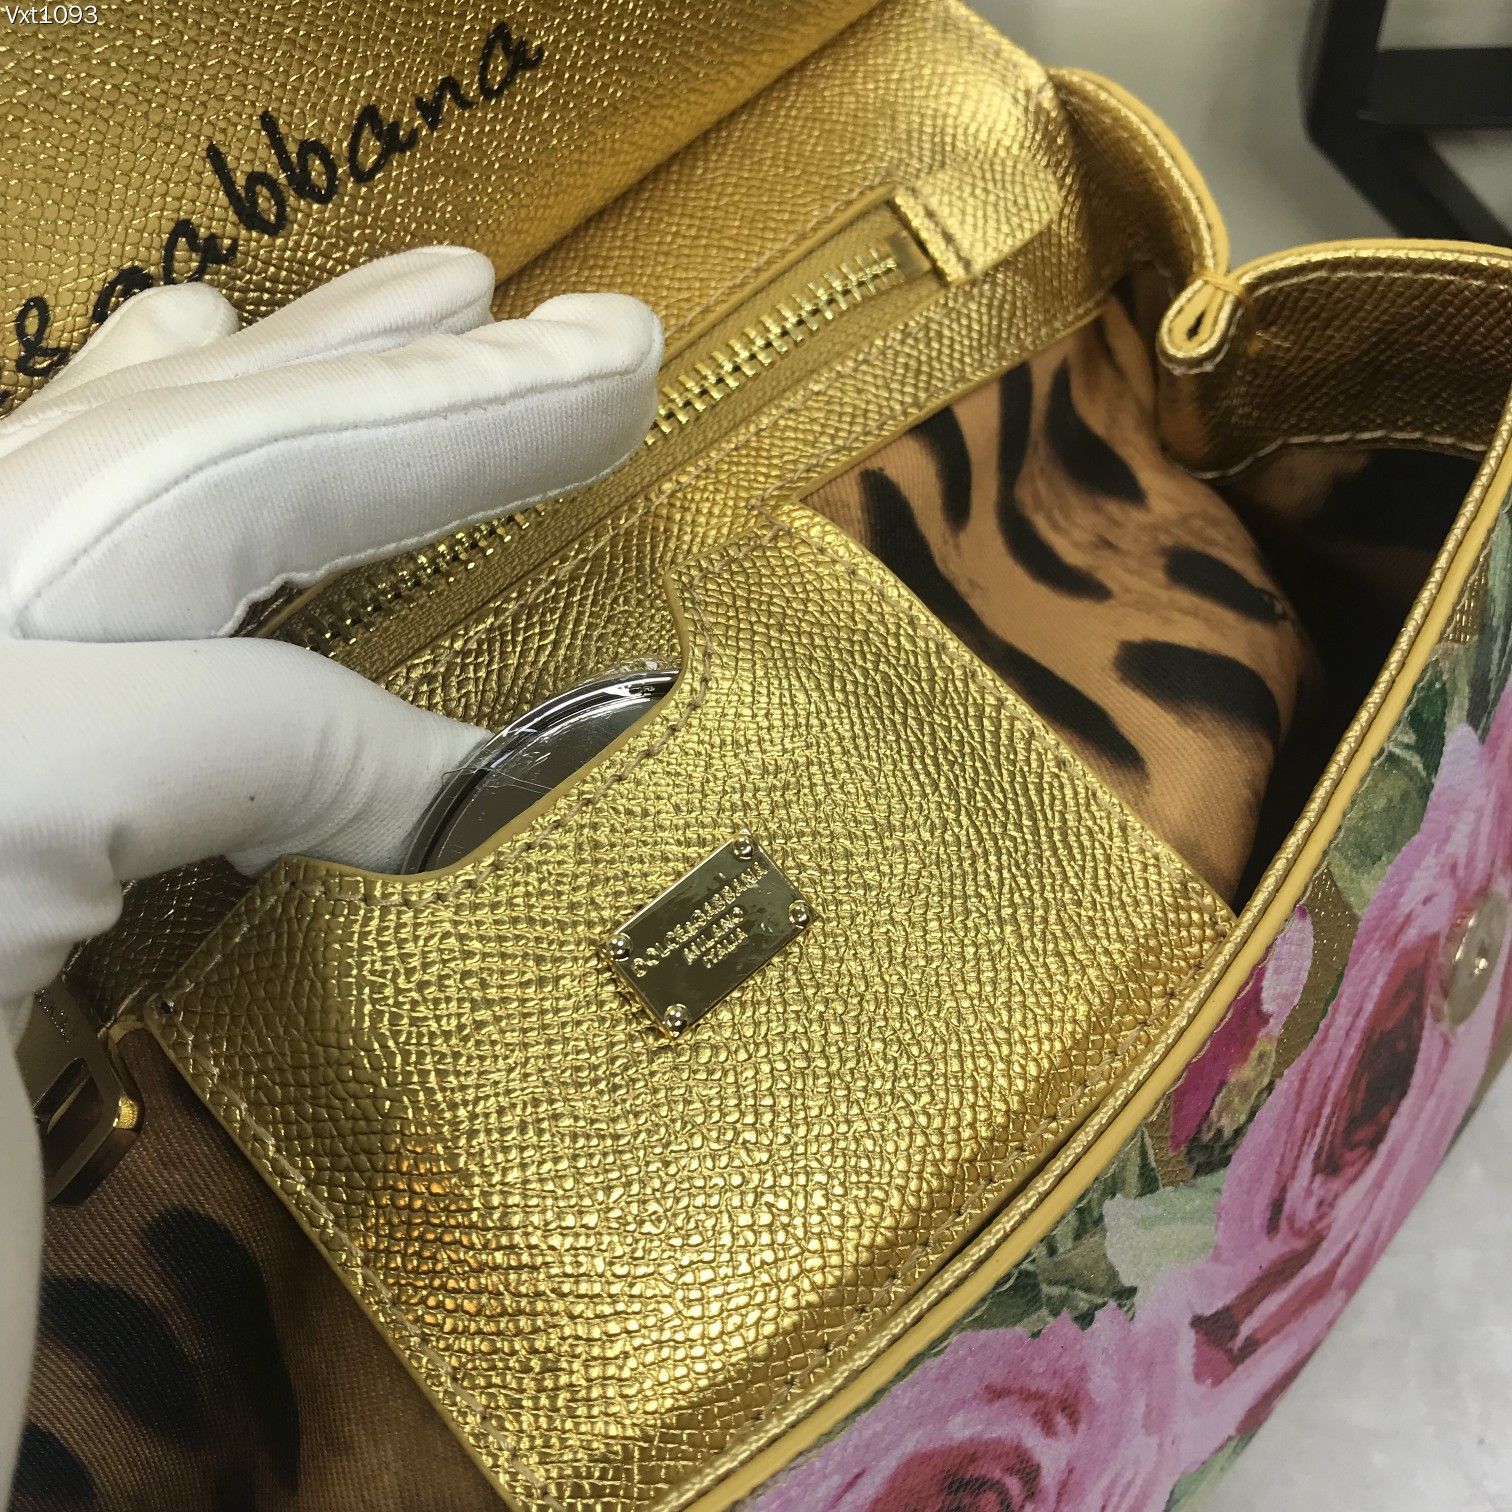 Dolce&Gabbana杜嘉班纳明星同款斜挎包可斜挎配镜子海外代购专用品有范有气场全新包型任何搭配都可